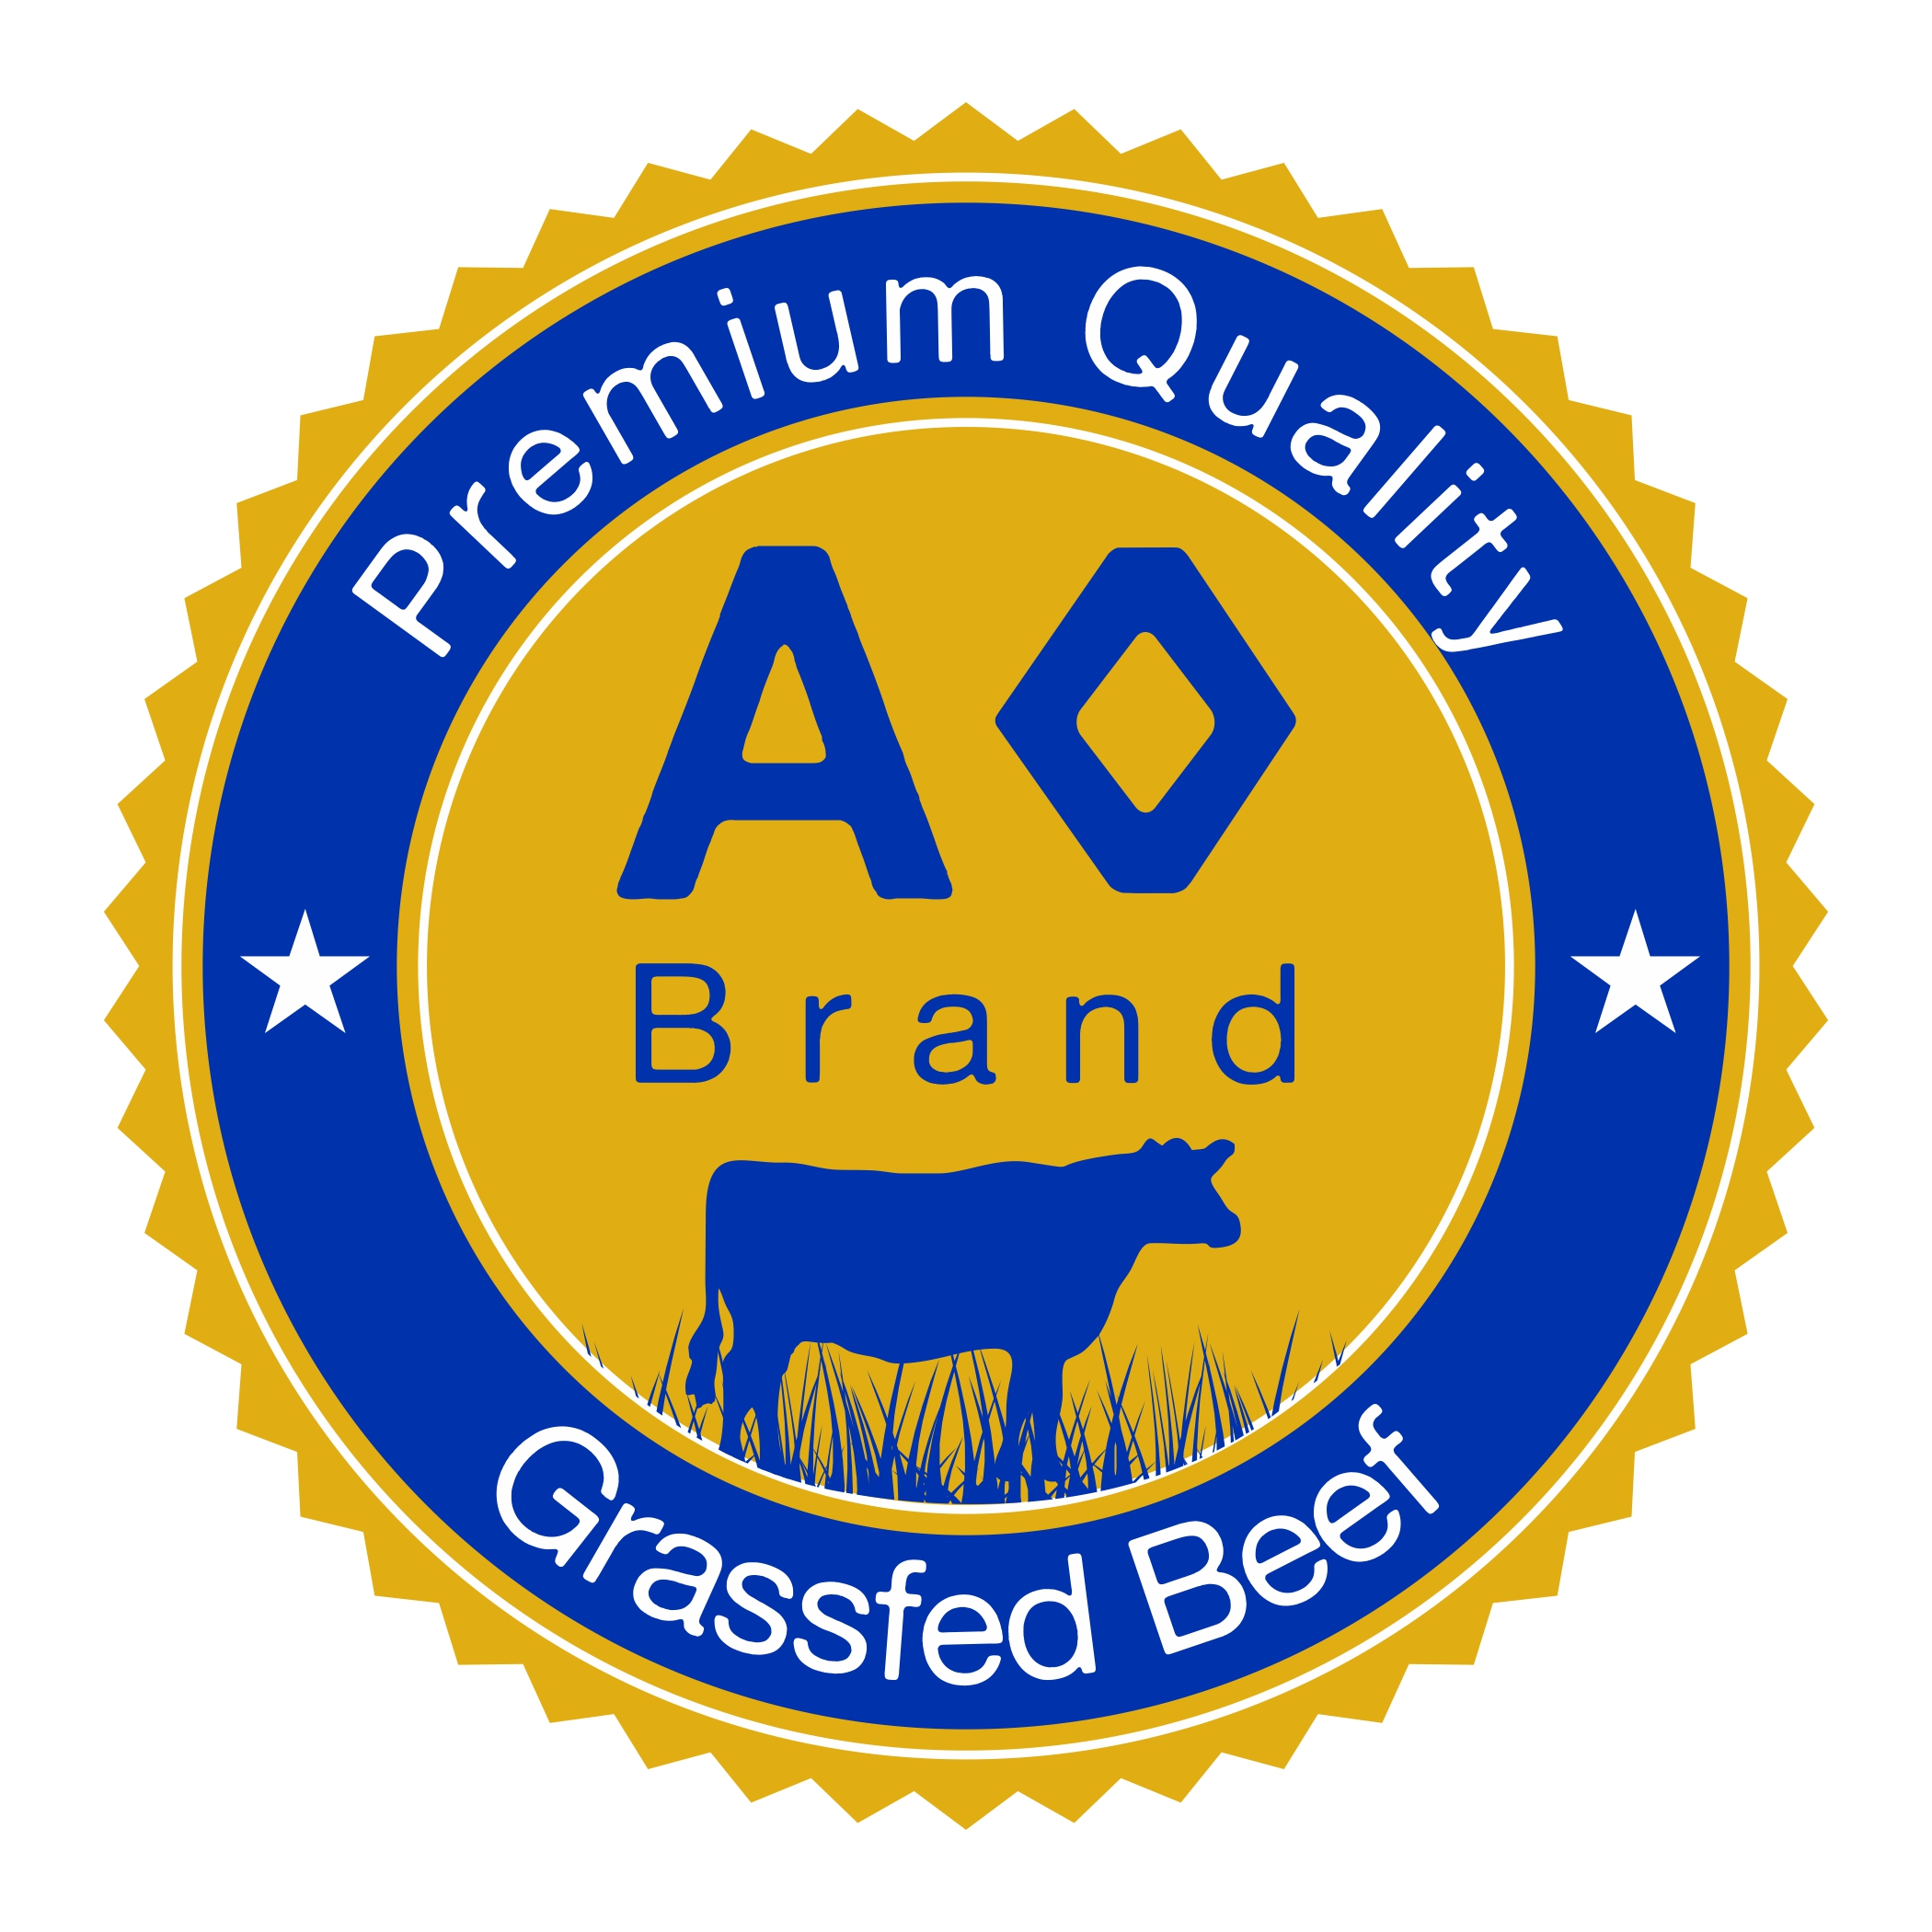 A Diamond Brand Premium Quality Grassfed Beef